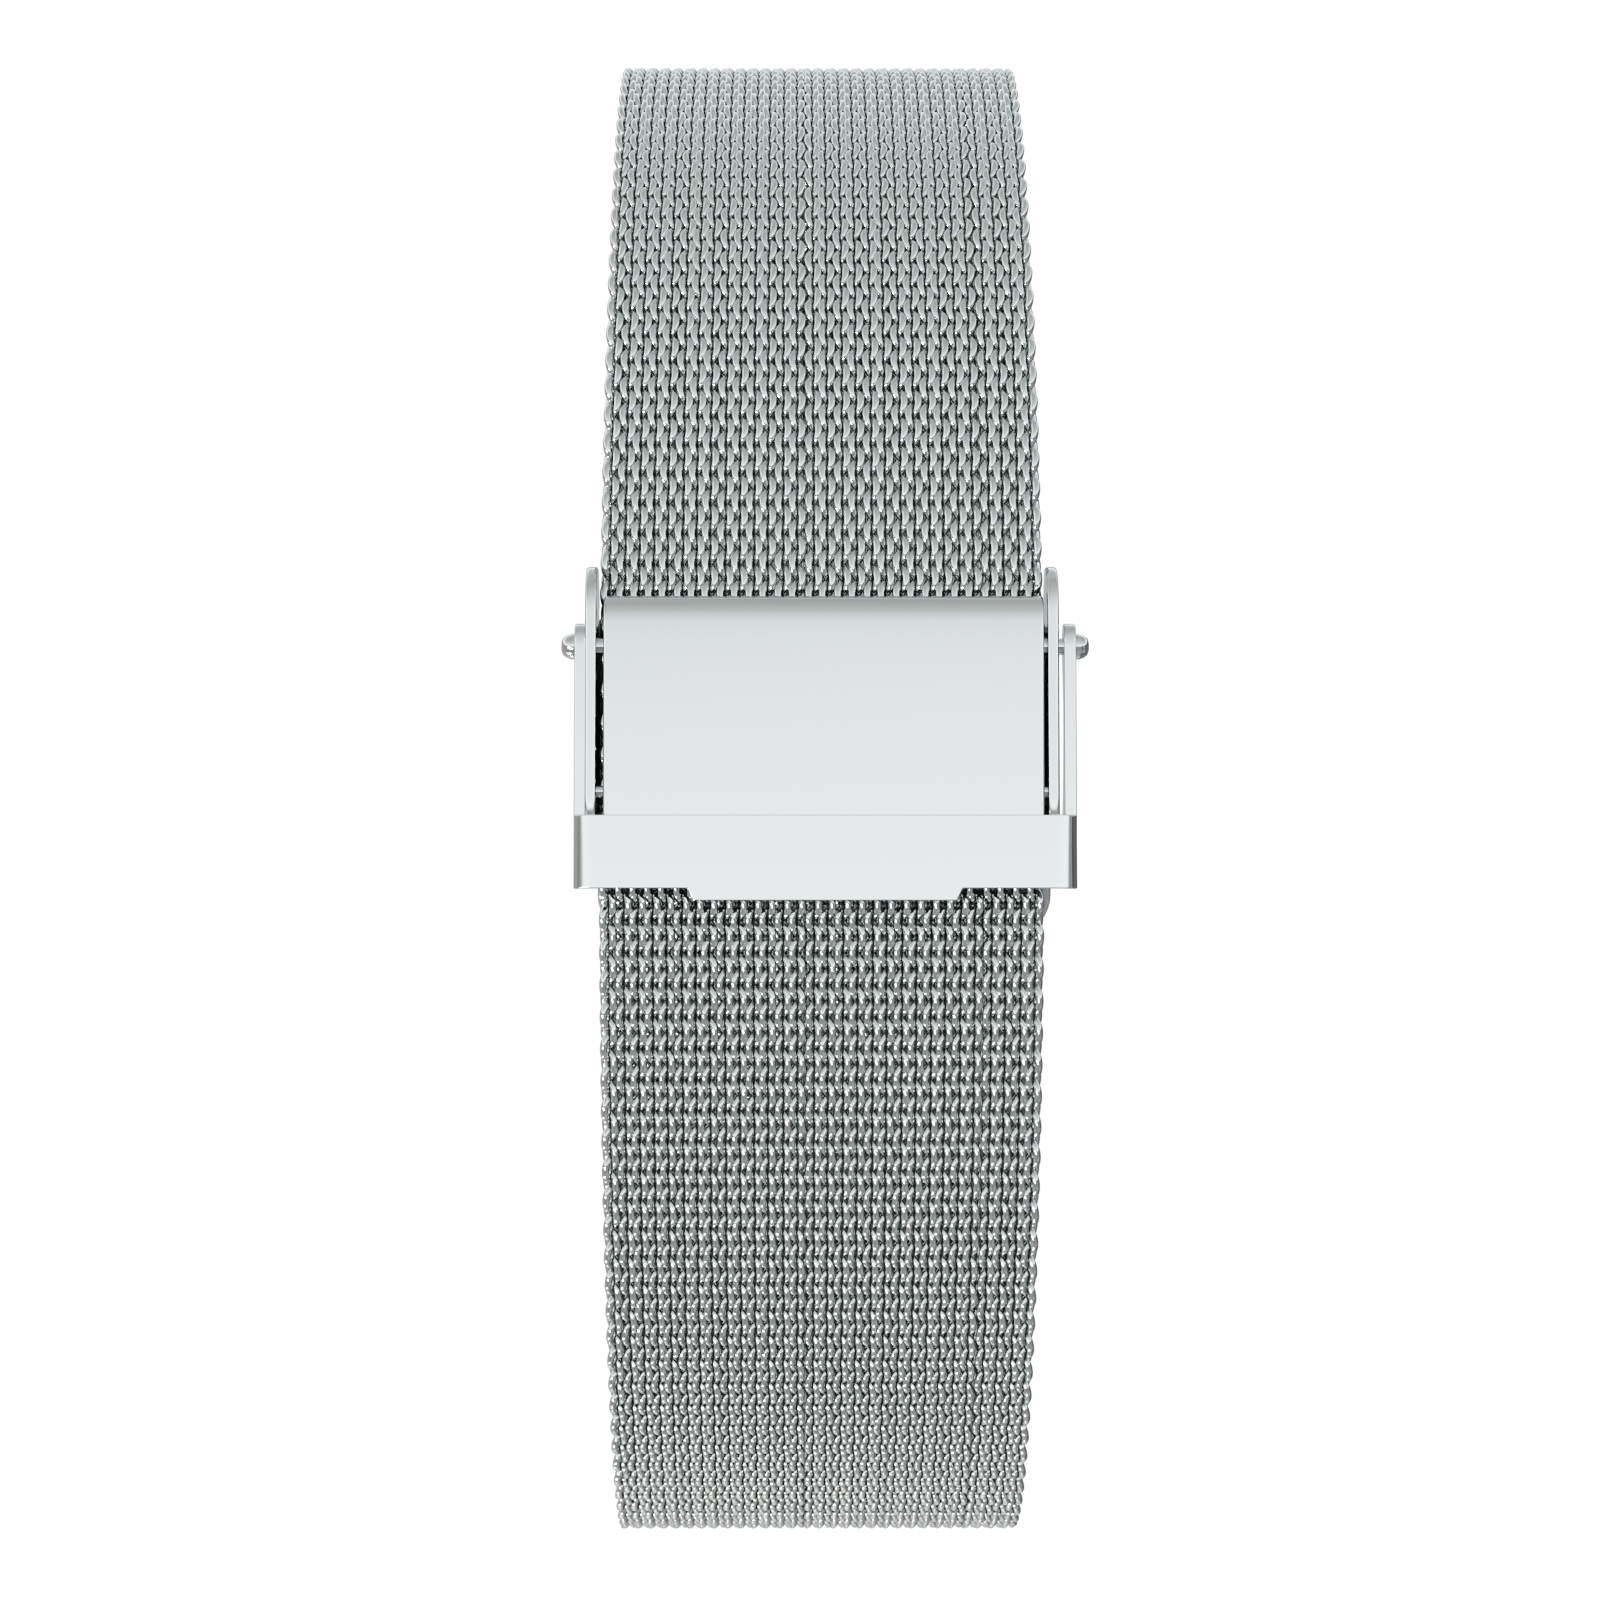 Magneto-Watch-Maschenarmband-Sicherheitsverschluss-Silber